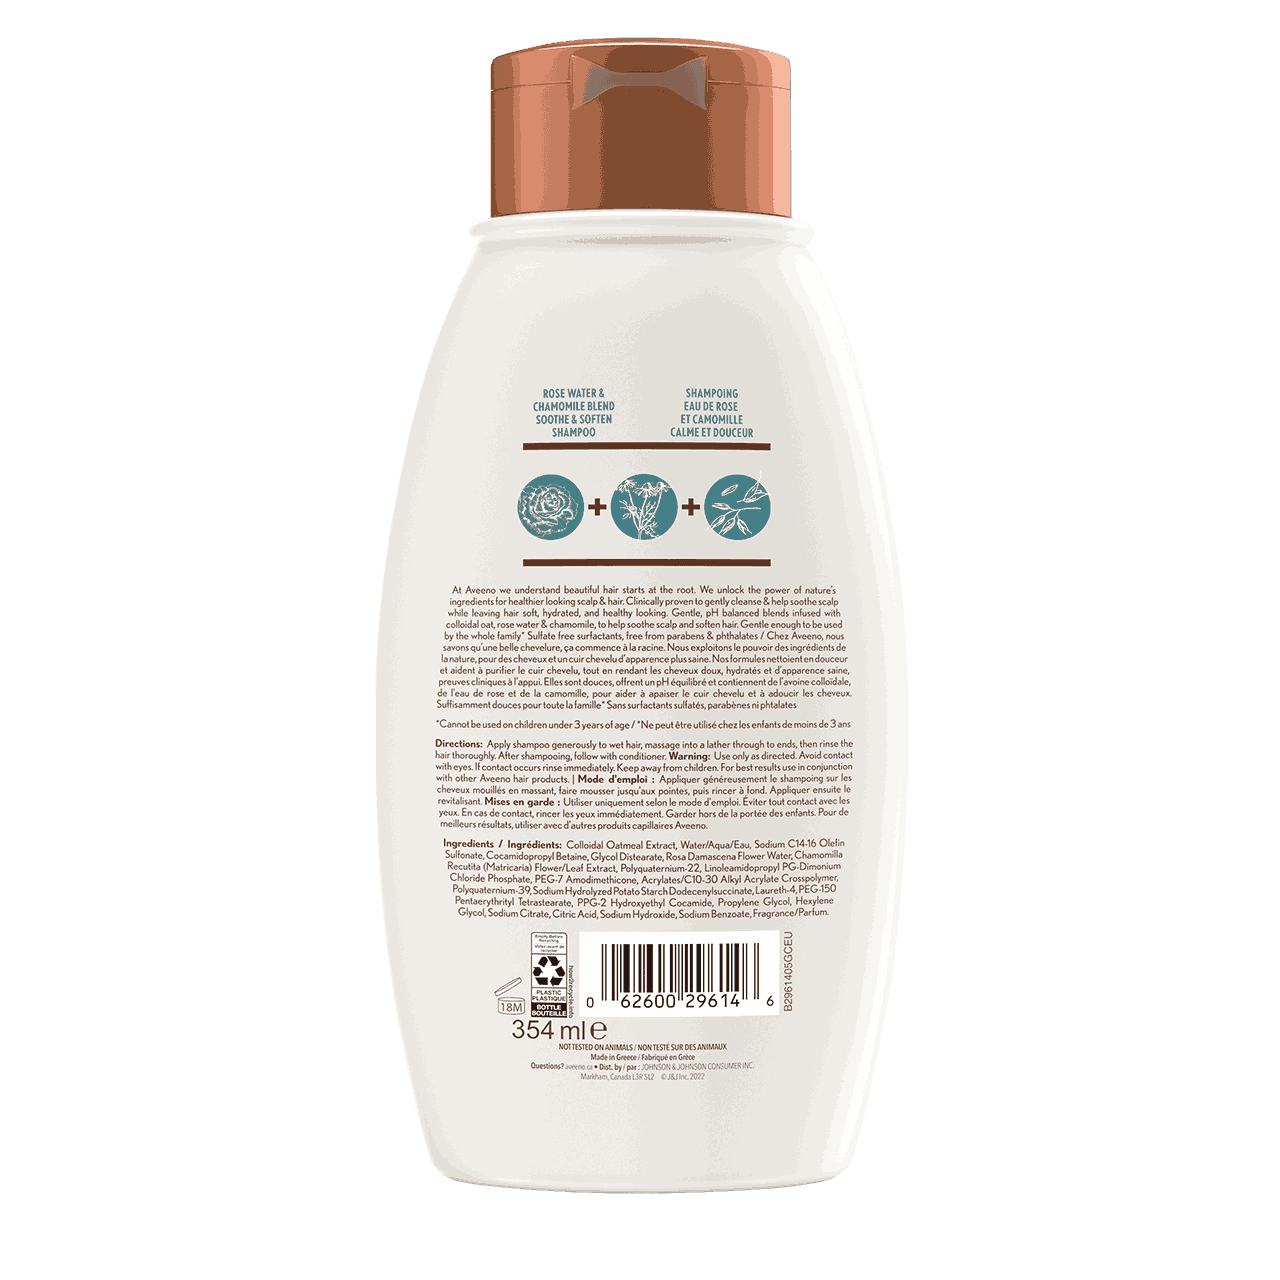 AVEENO® Rose Water & Chamomile Blend Shampoo, 354ml bottle, back label